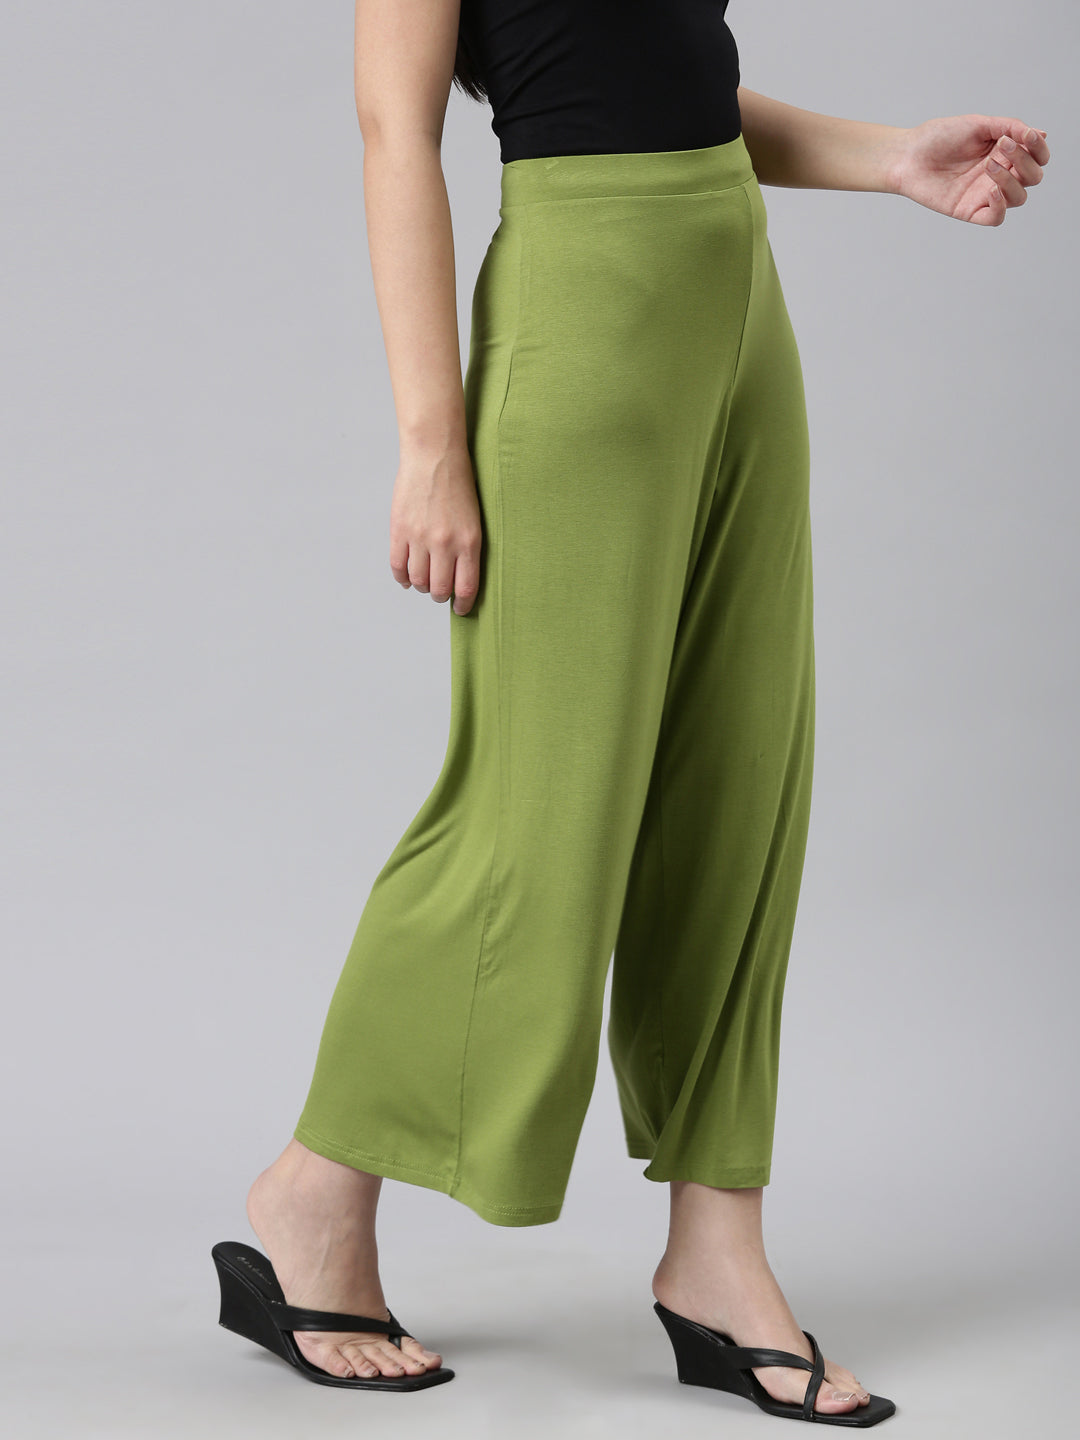 Buy Palazzo Pants Wide Leg Pants Green Linen Skirt Pants High Online in  India  Etsy